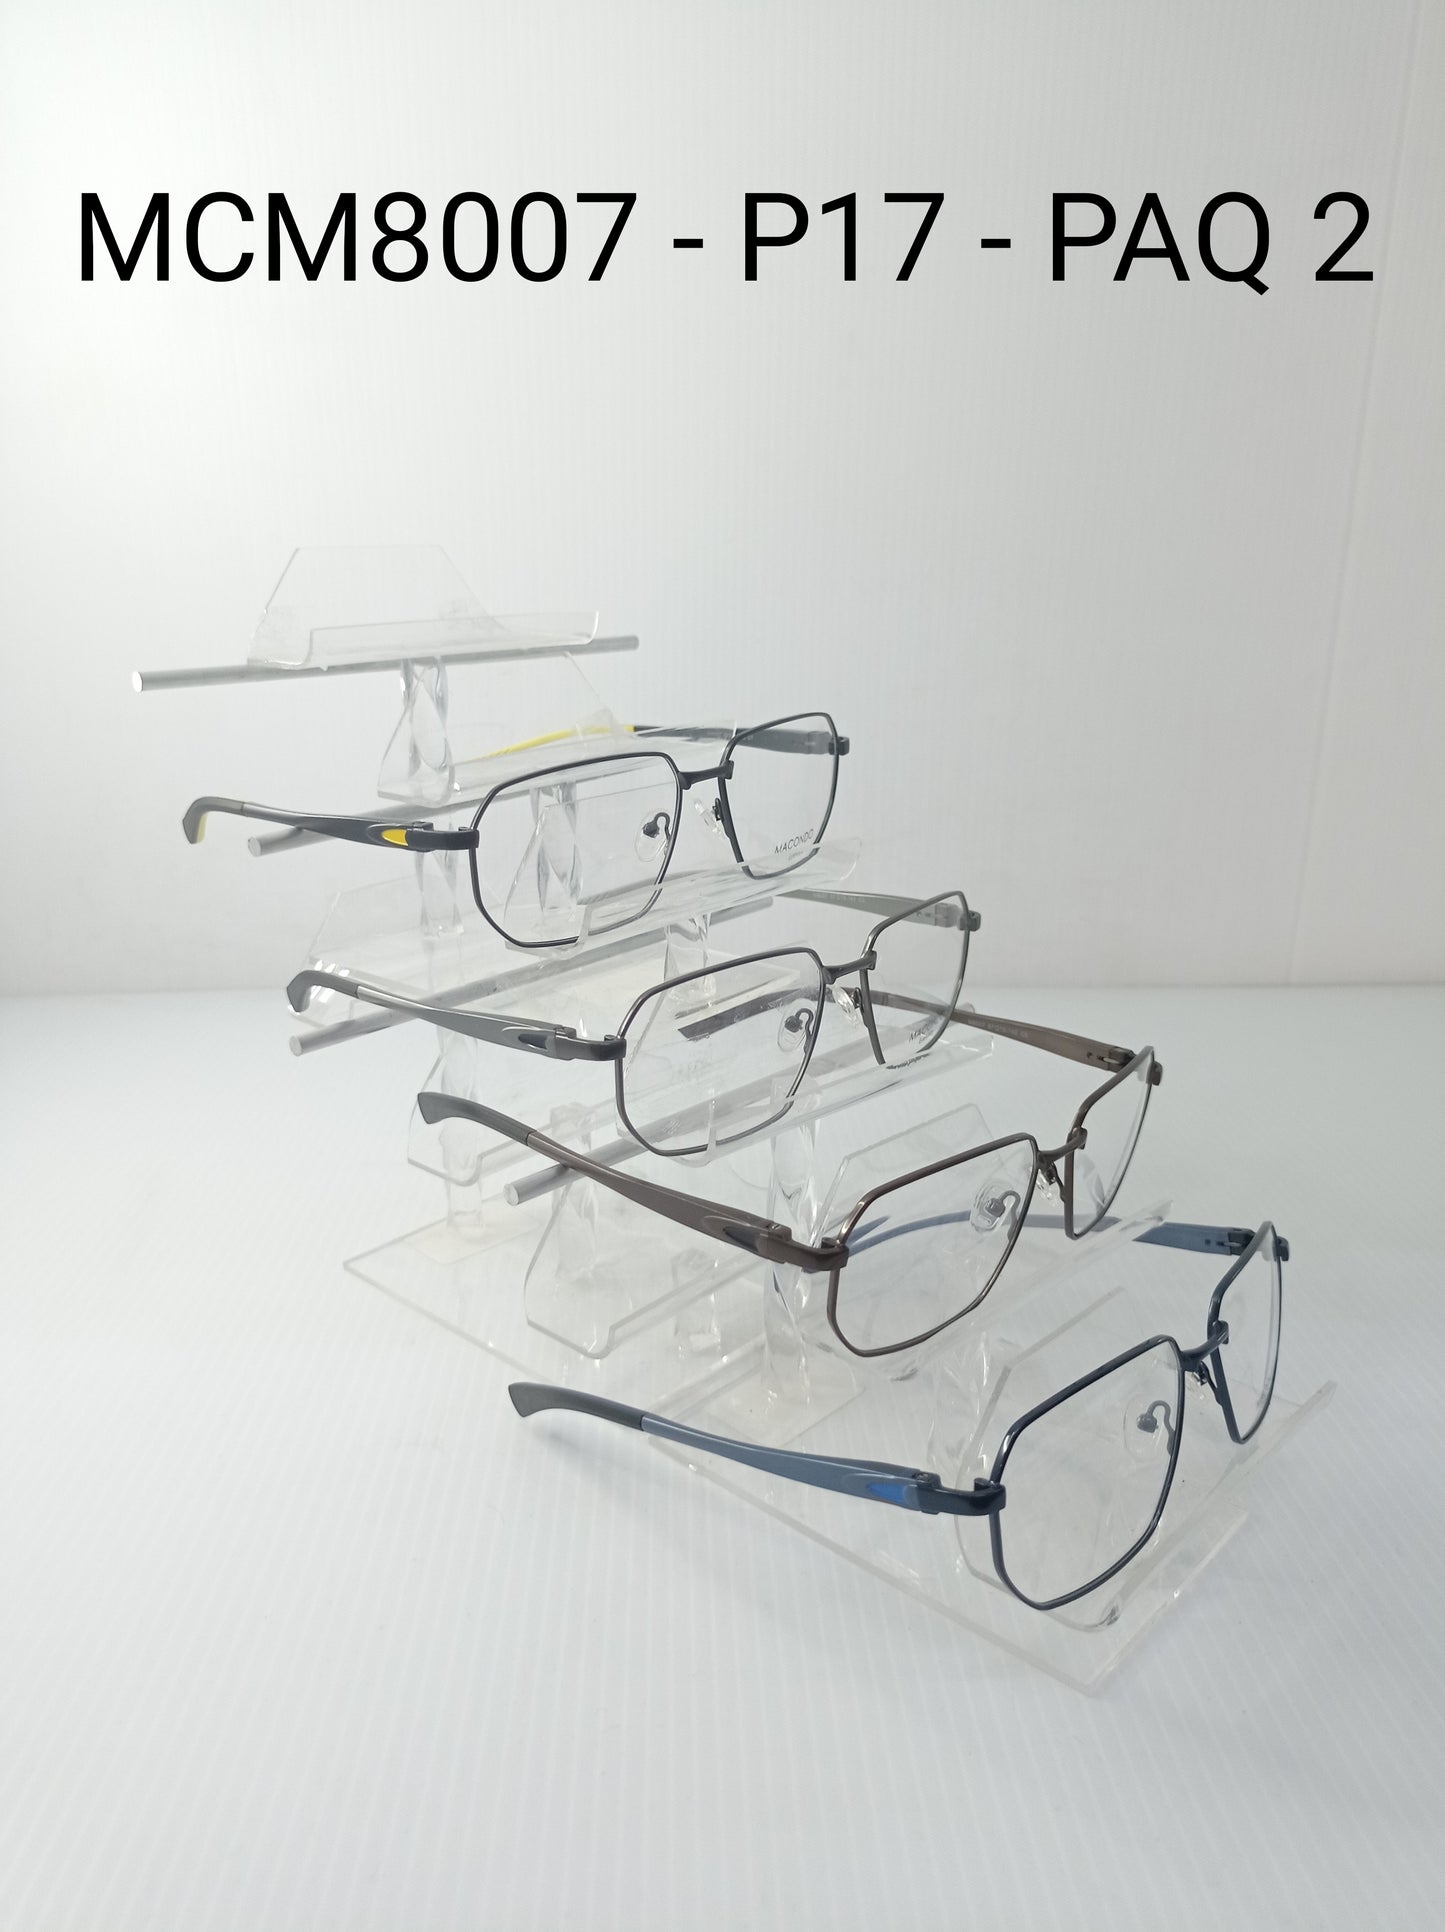 MACONDO - MCM8007 - P17